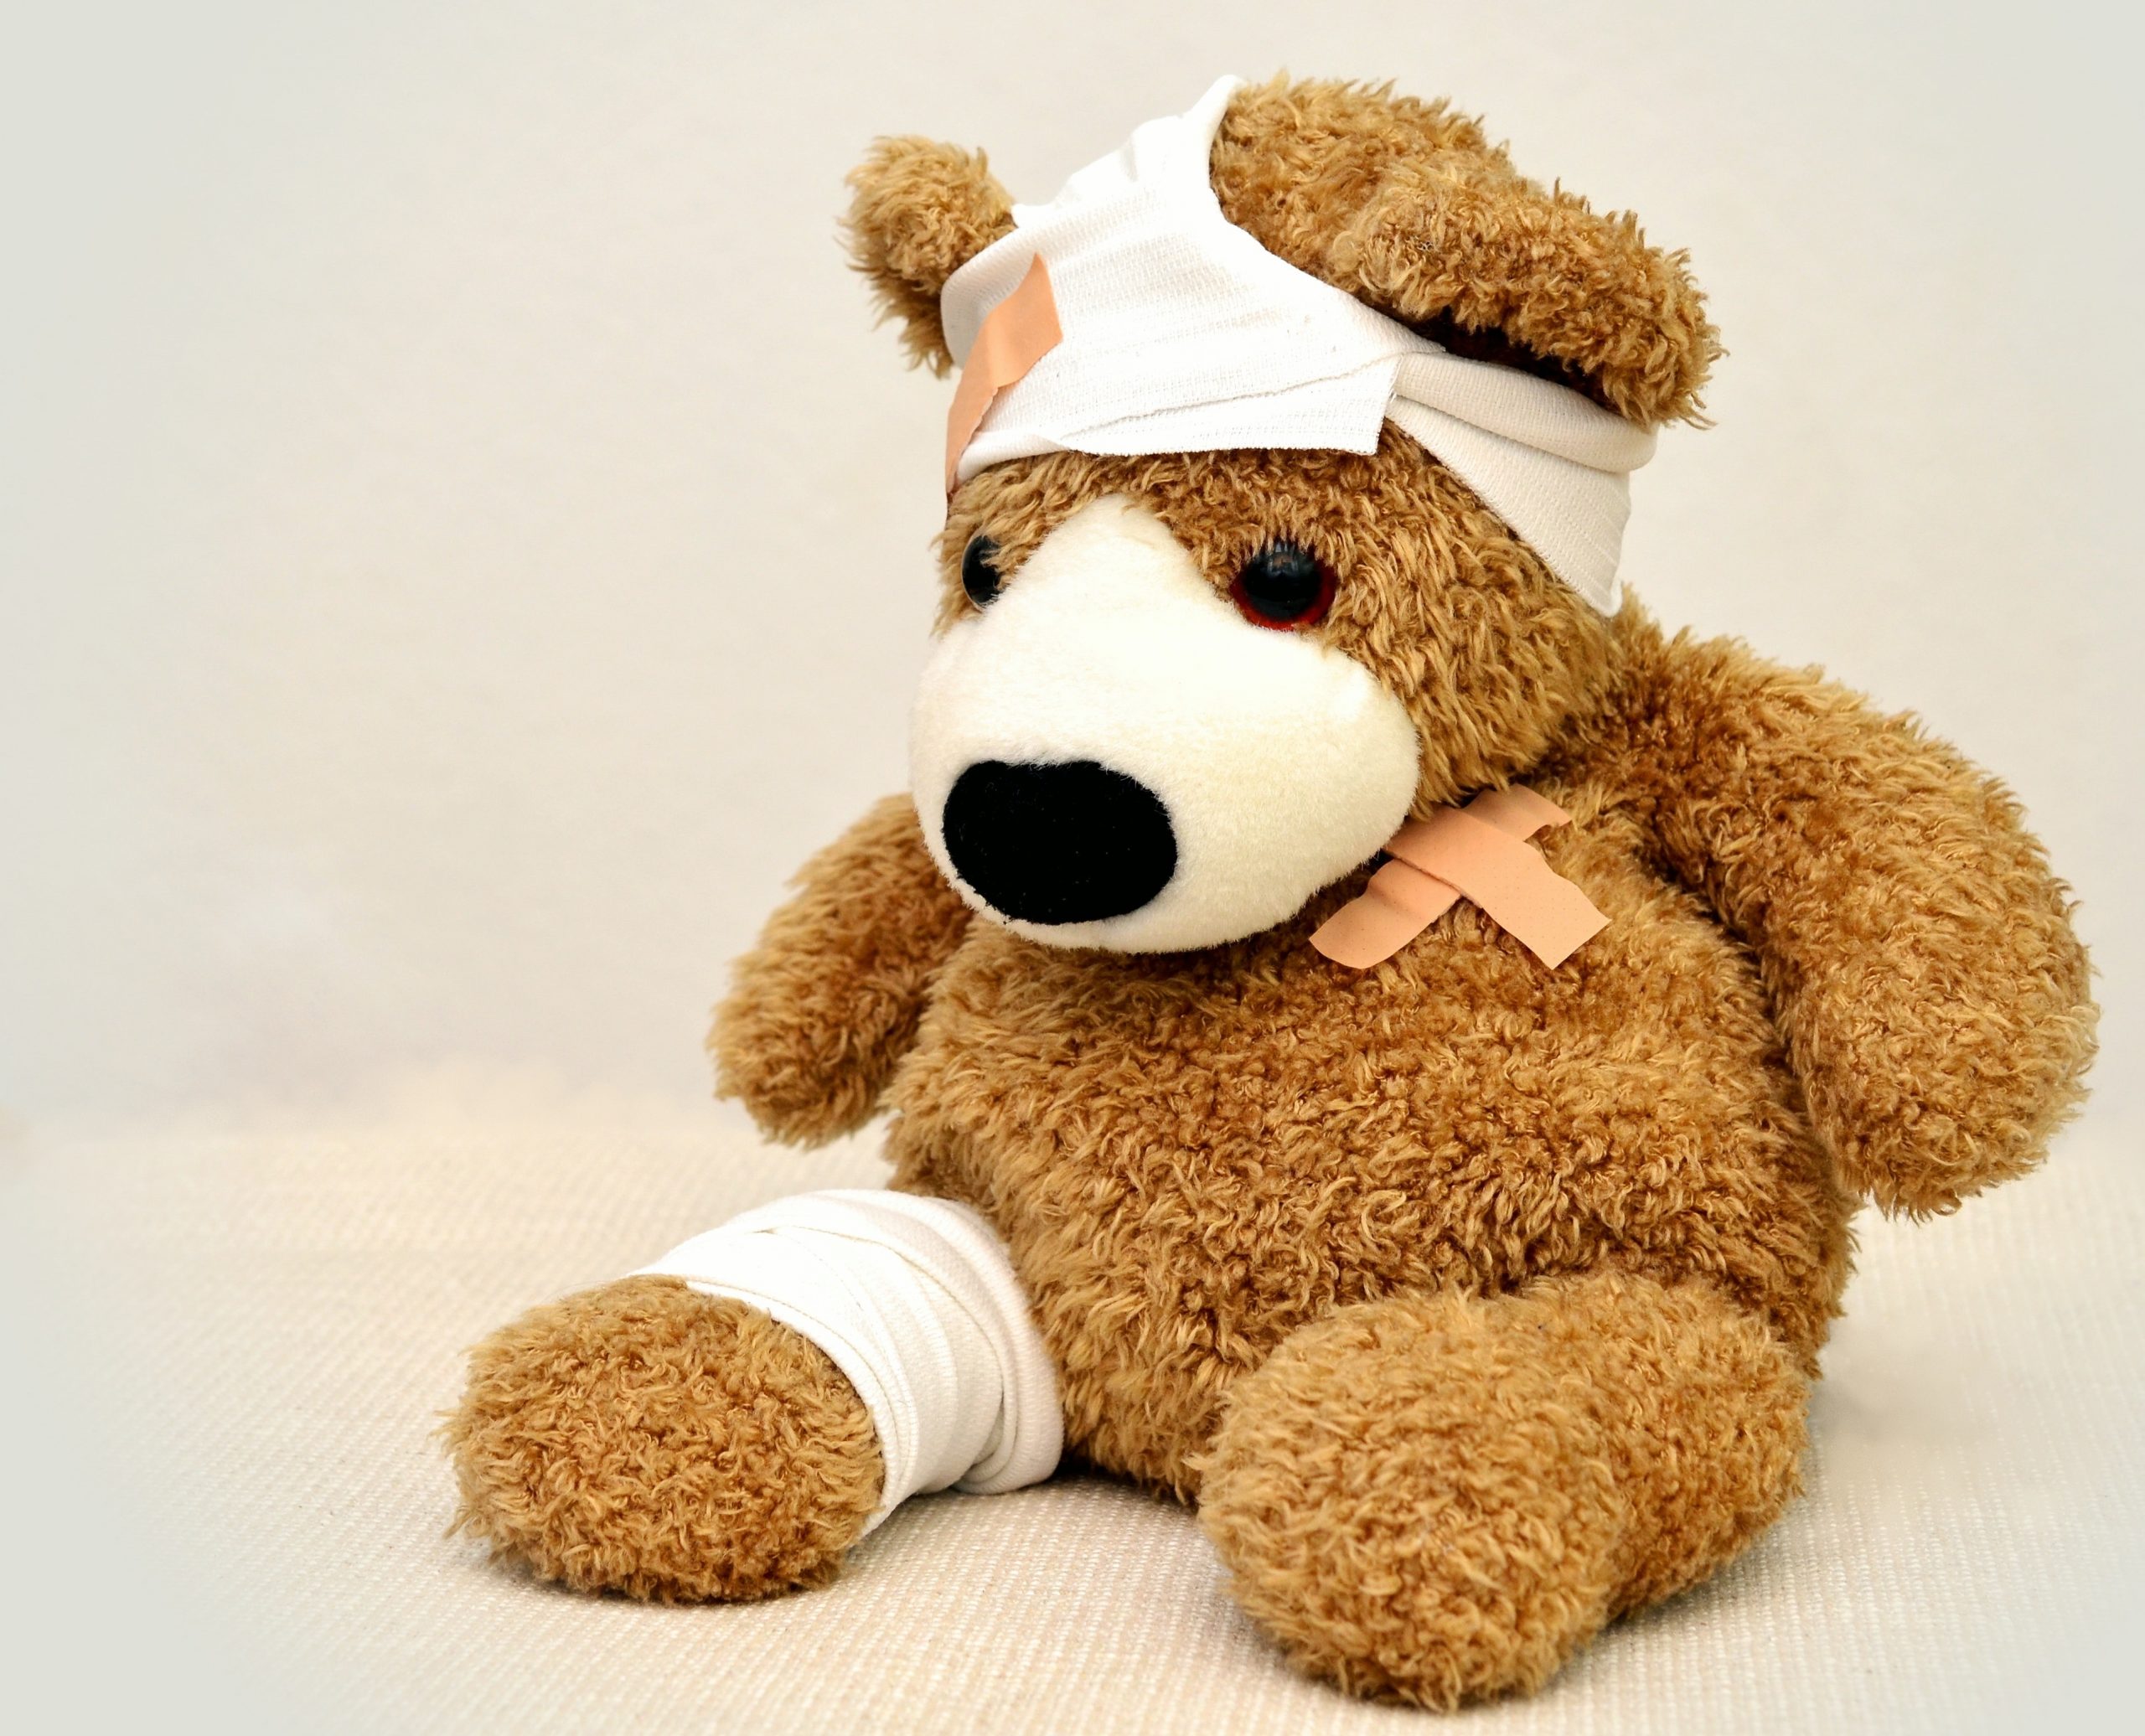 12 First Aid Myths Debunked by Paramedics